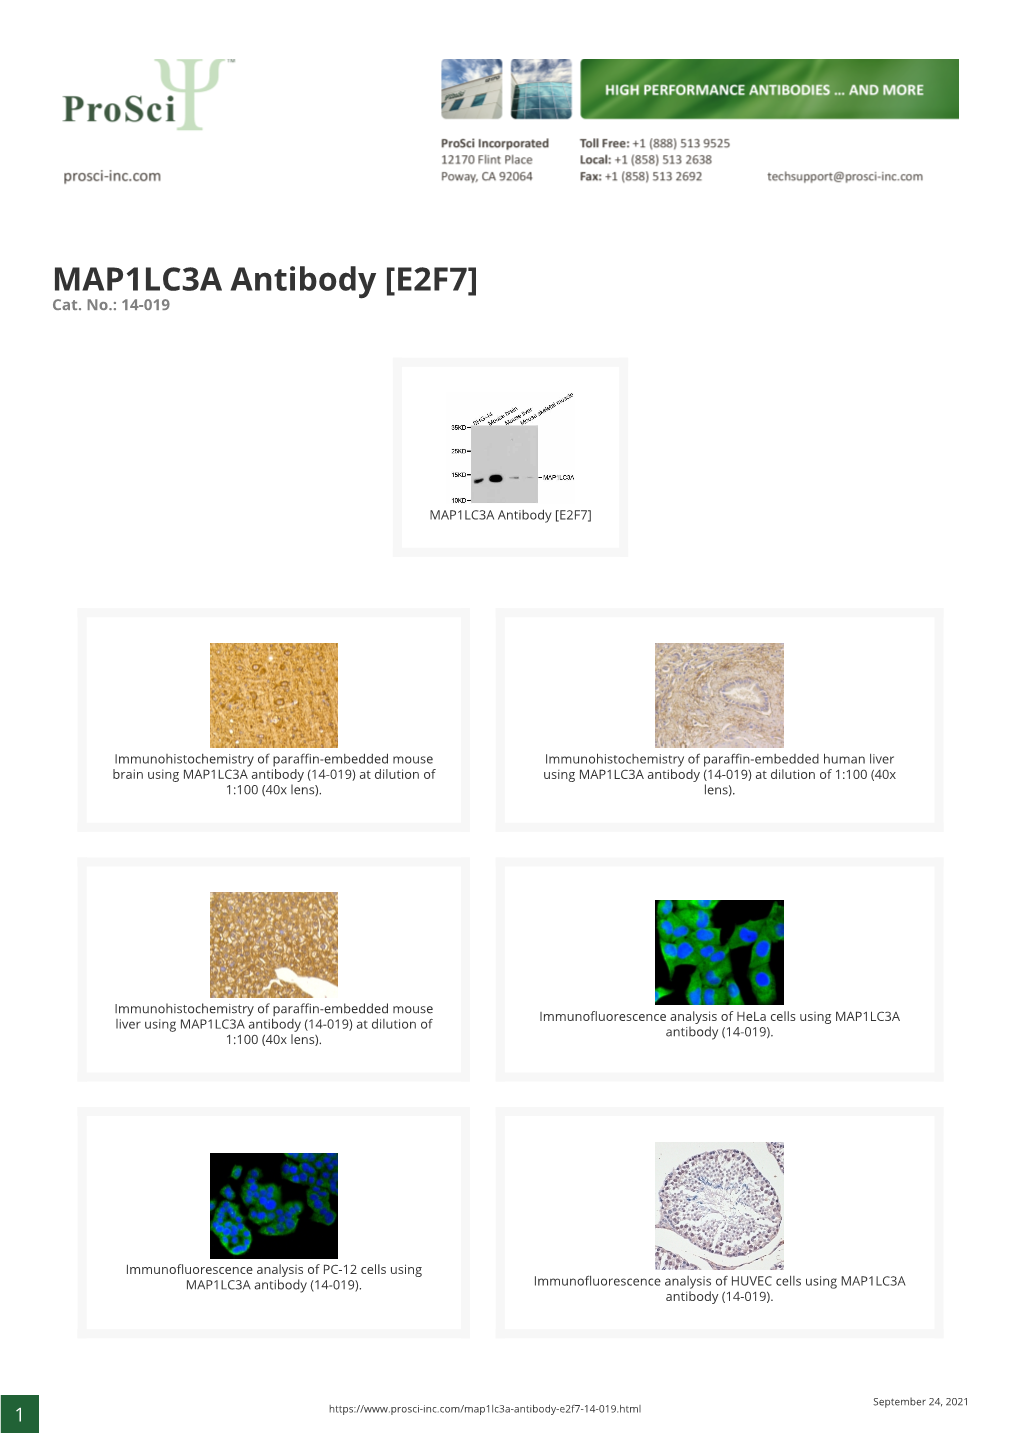 MAP1LC3A Antibody [E2F7] Cat